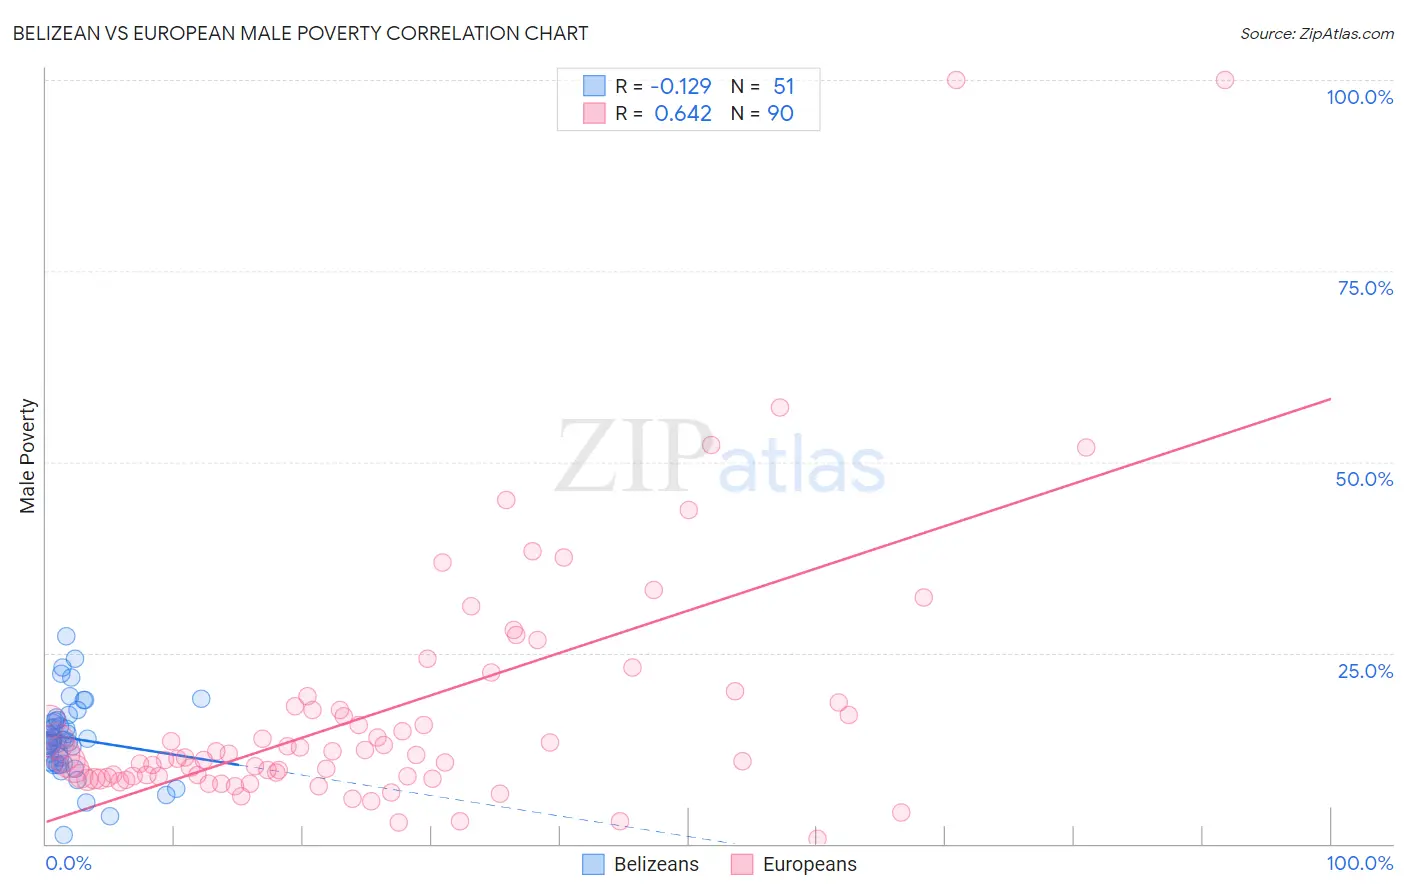 Belizean vs European Male Poverty